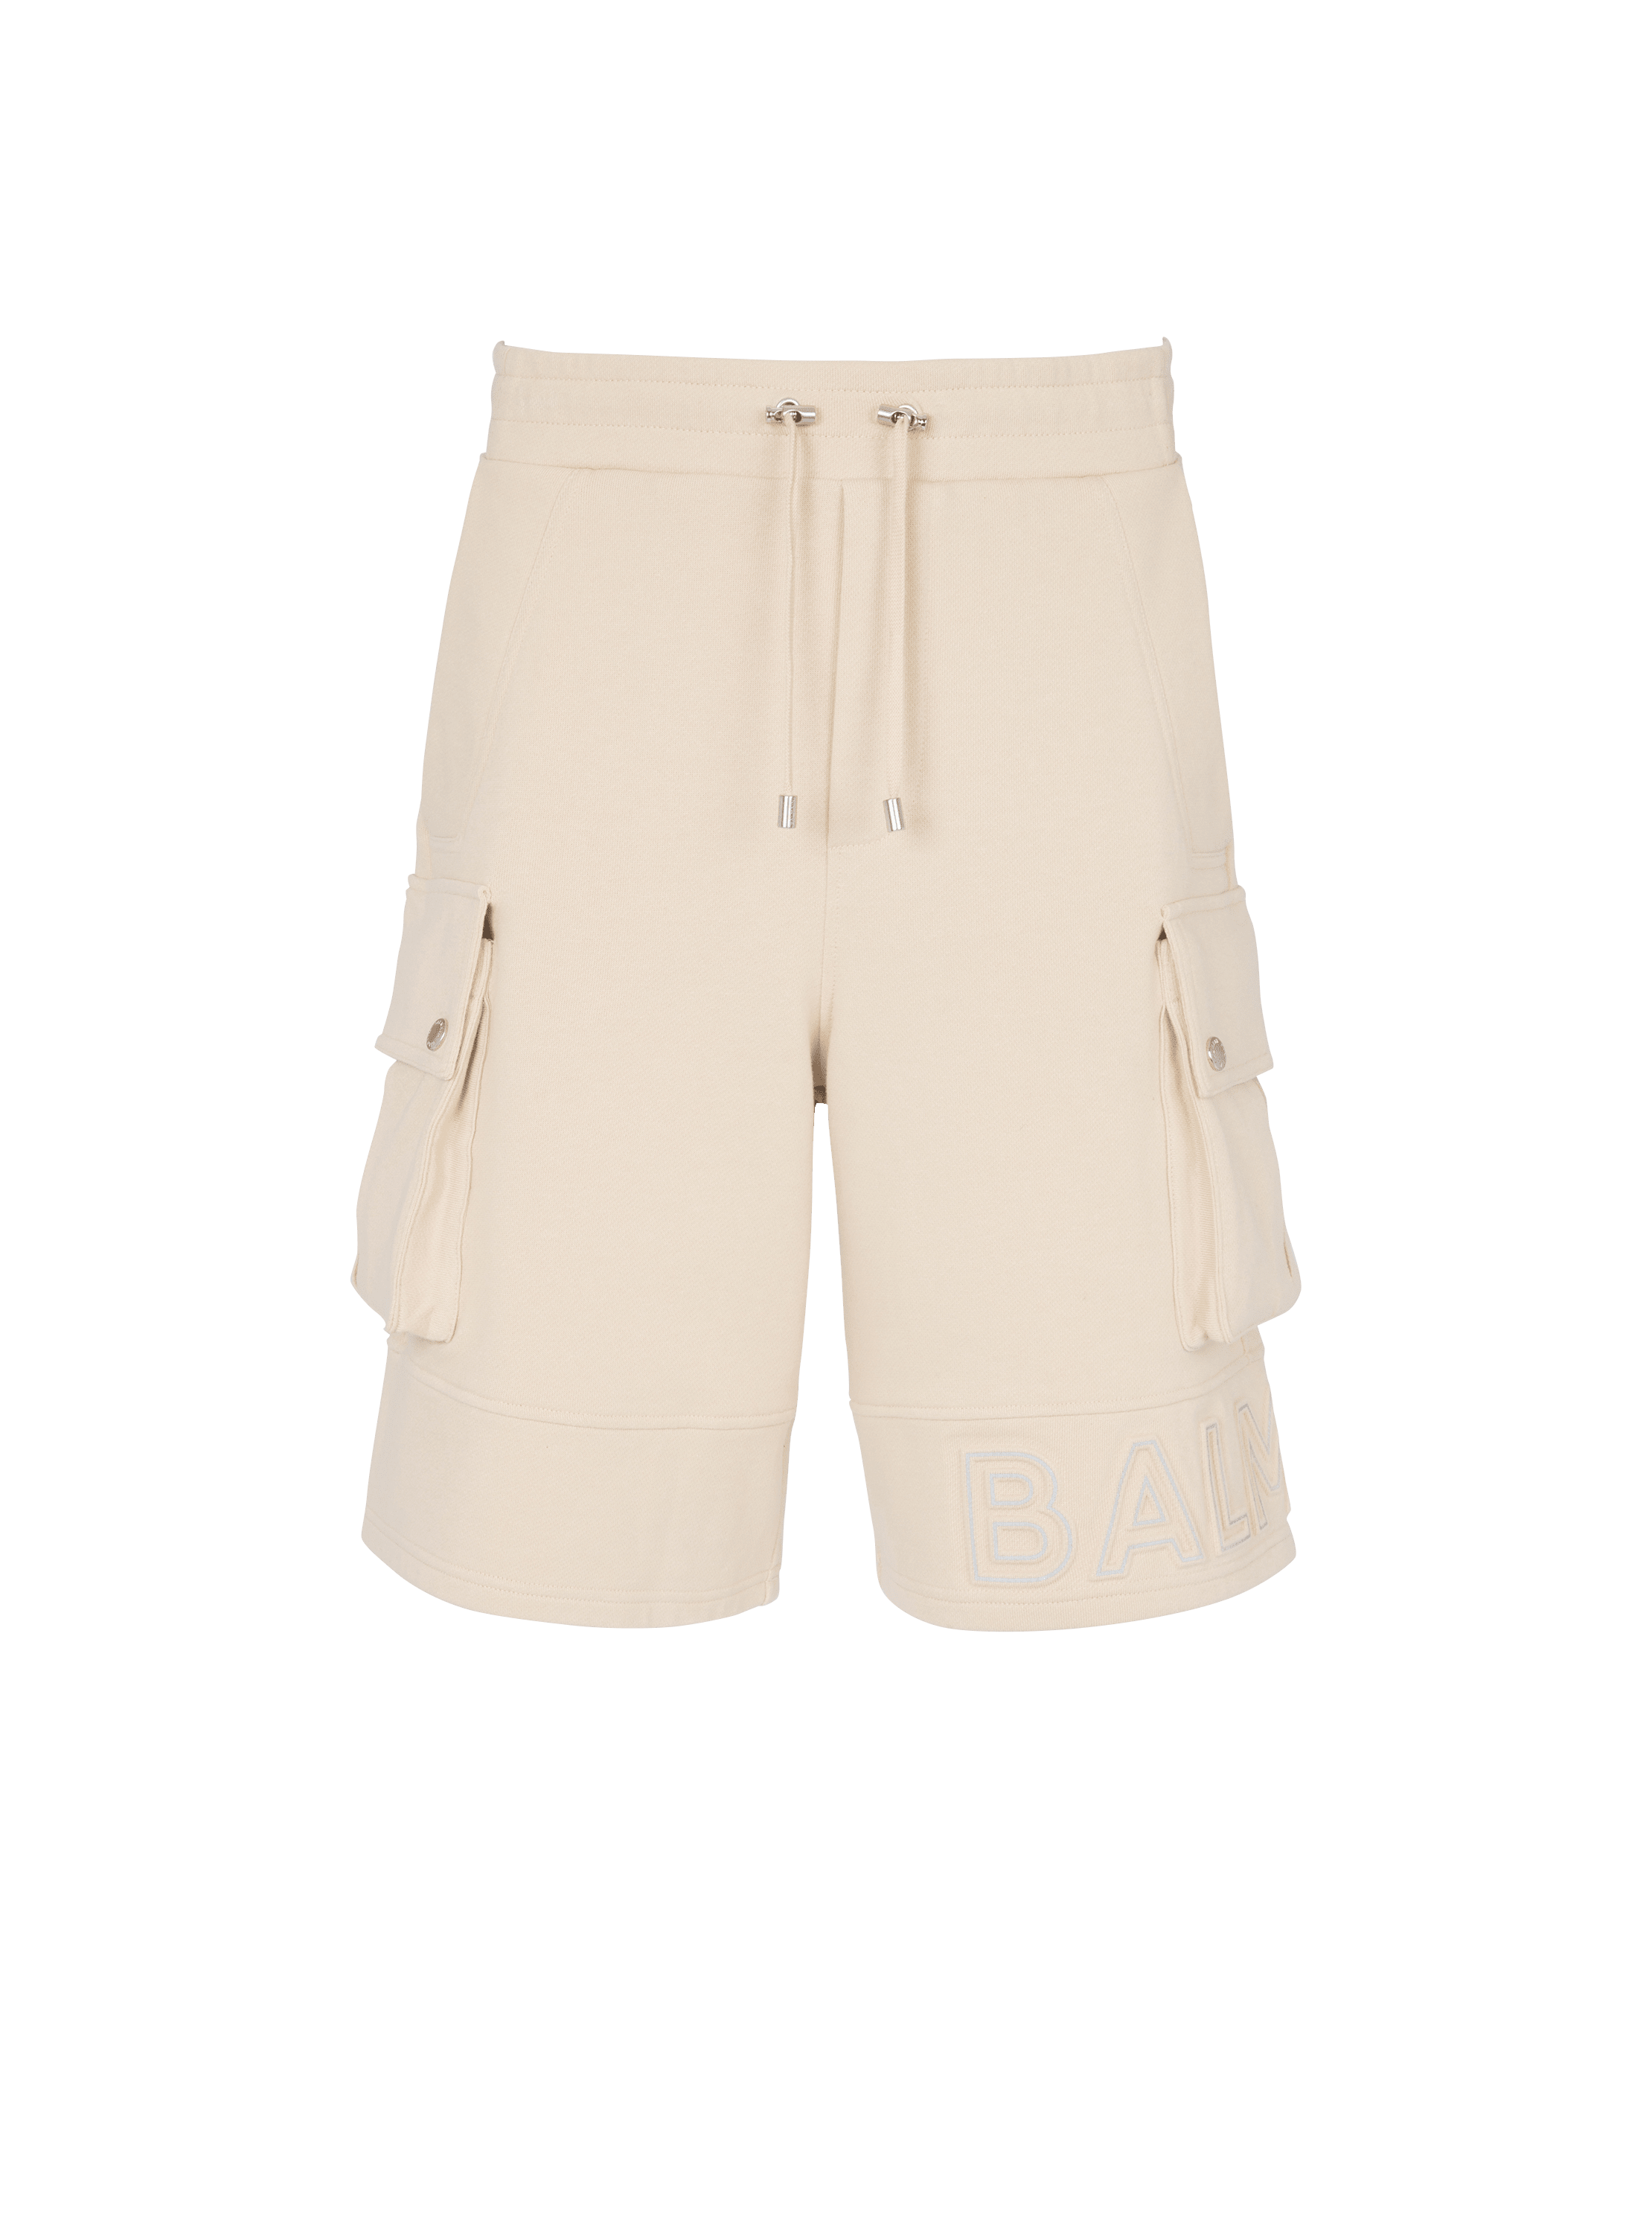 Cargo shorts with reflective Balmain logo, beige, hi-res